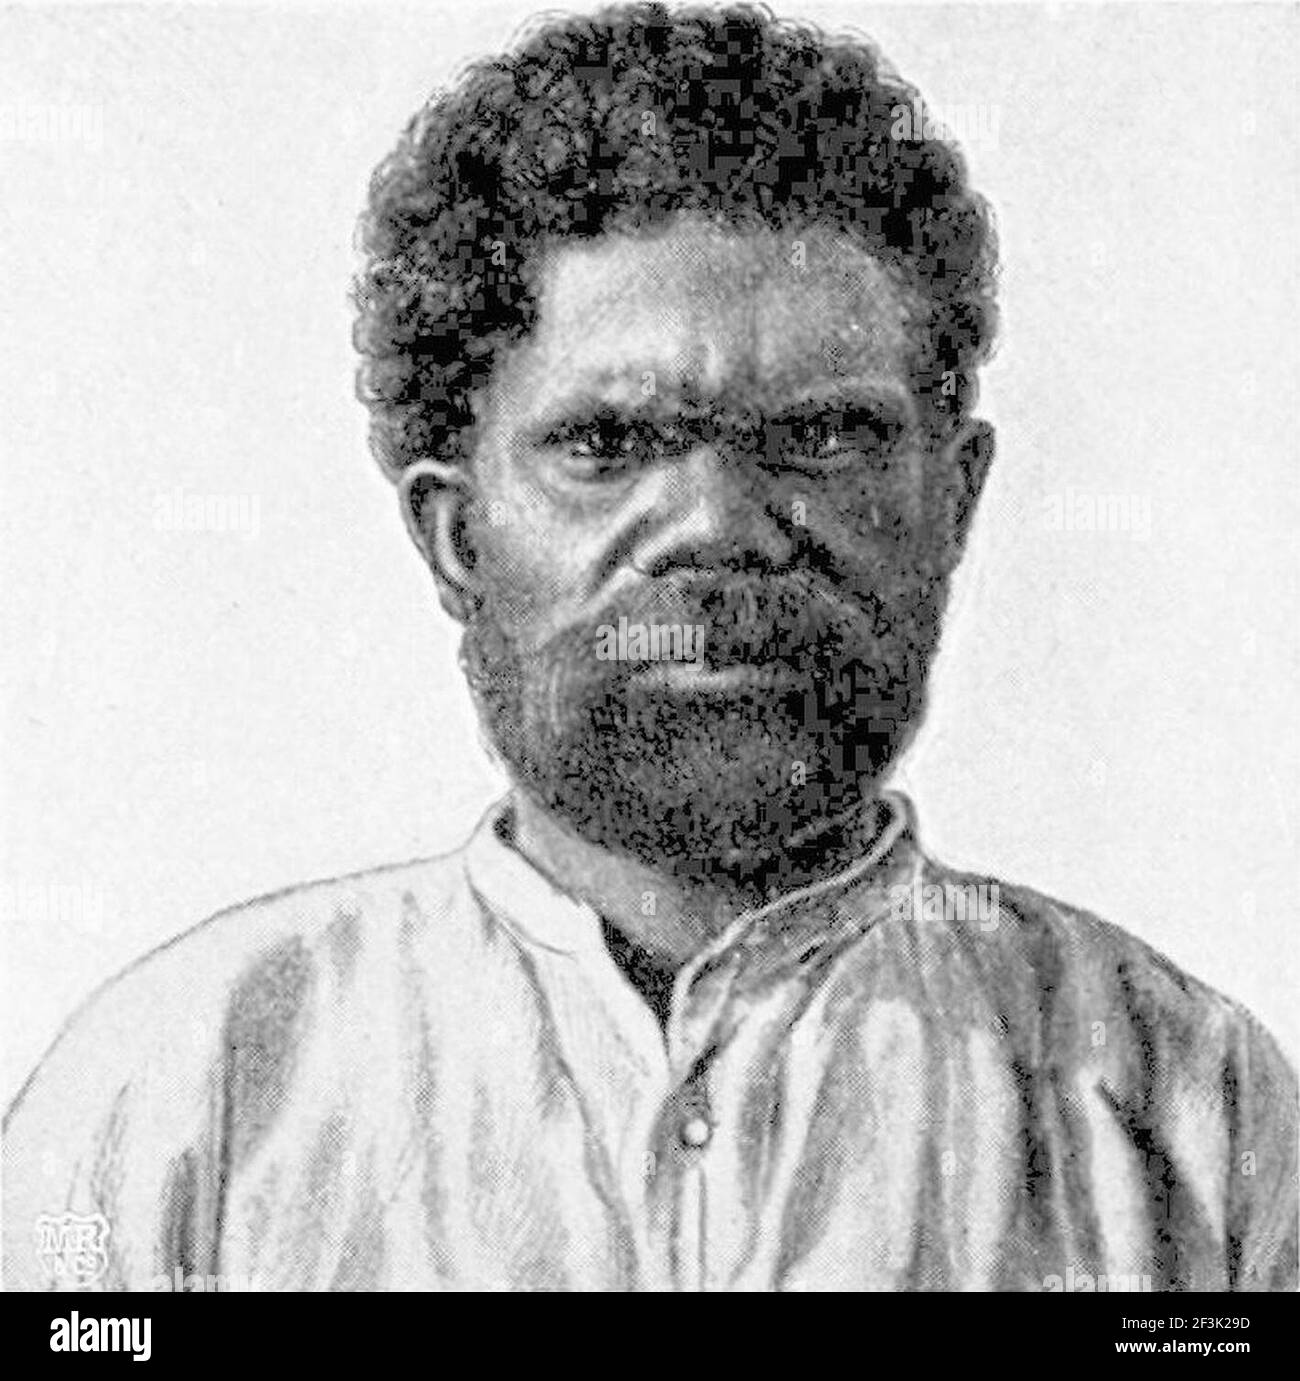 Aboriginal historic Black and White Stock Photos & Images - Alamy